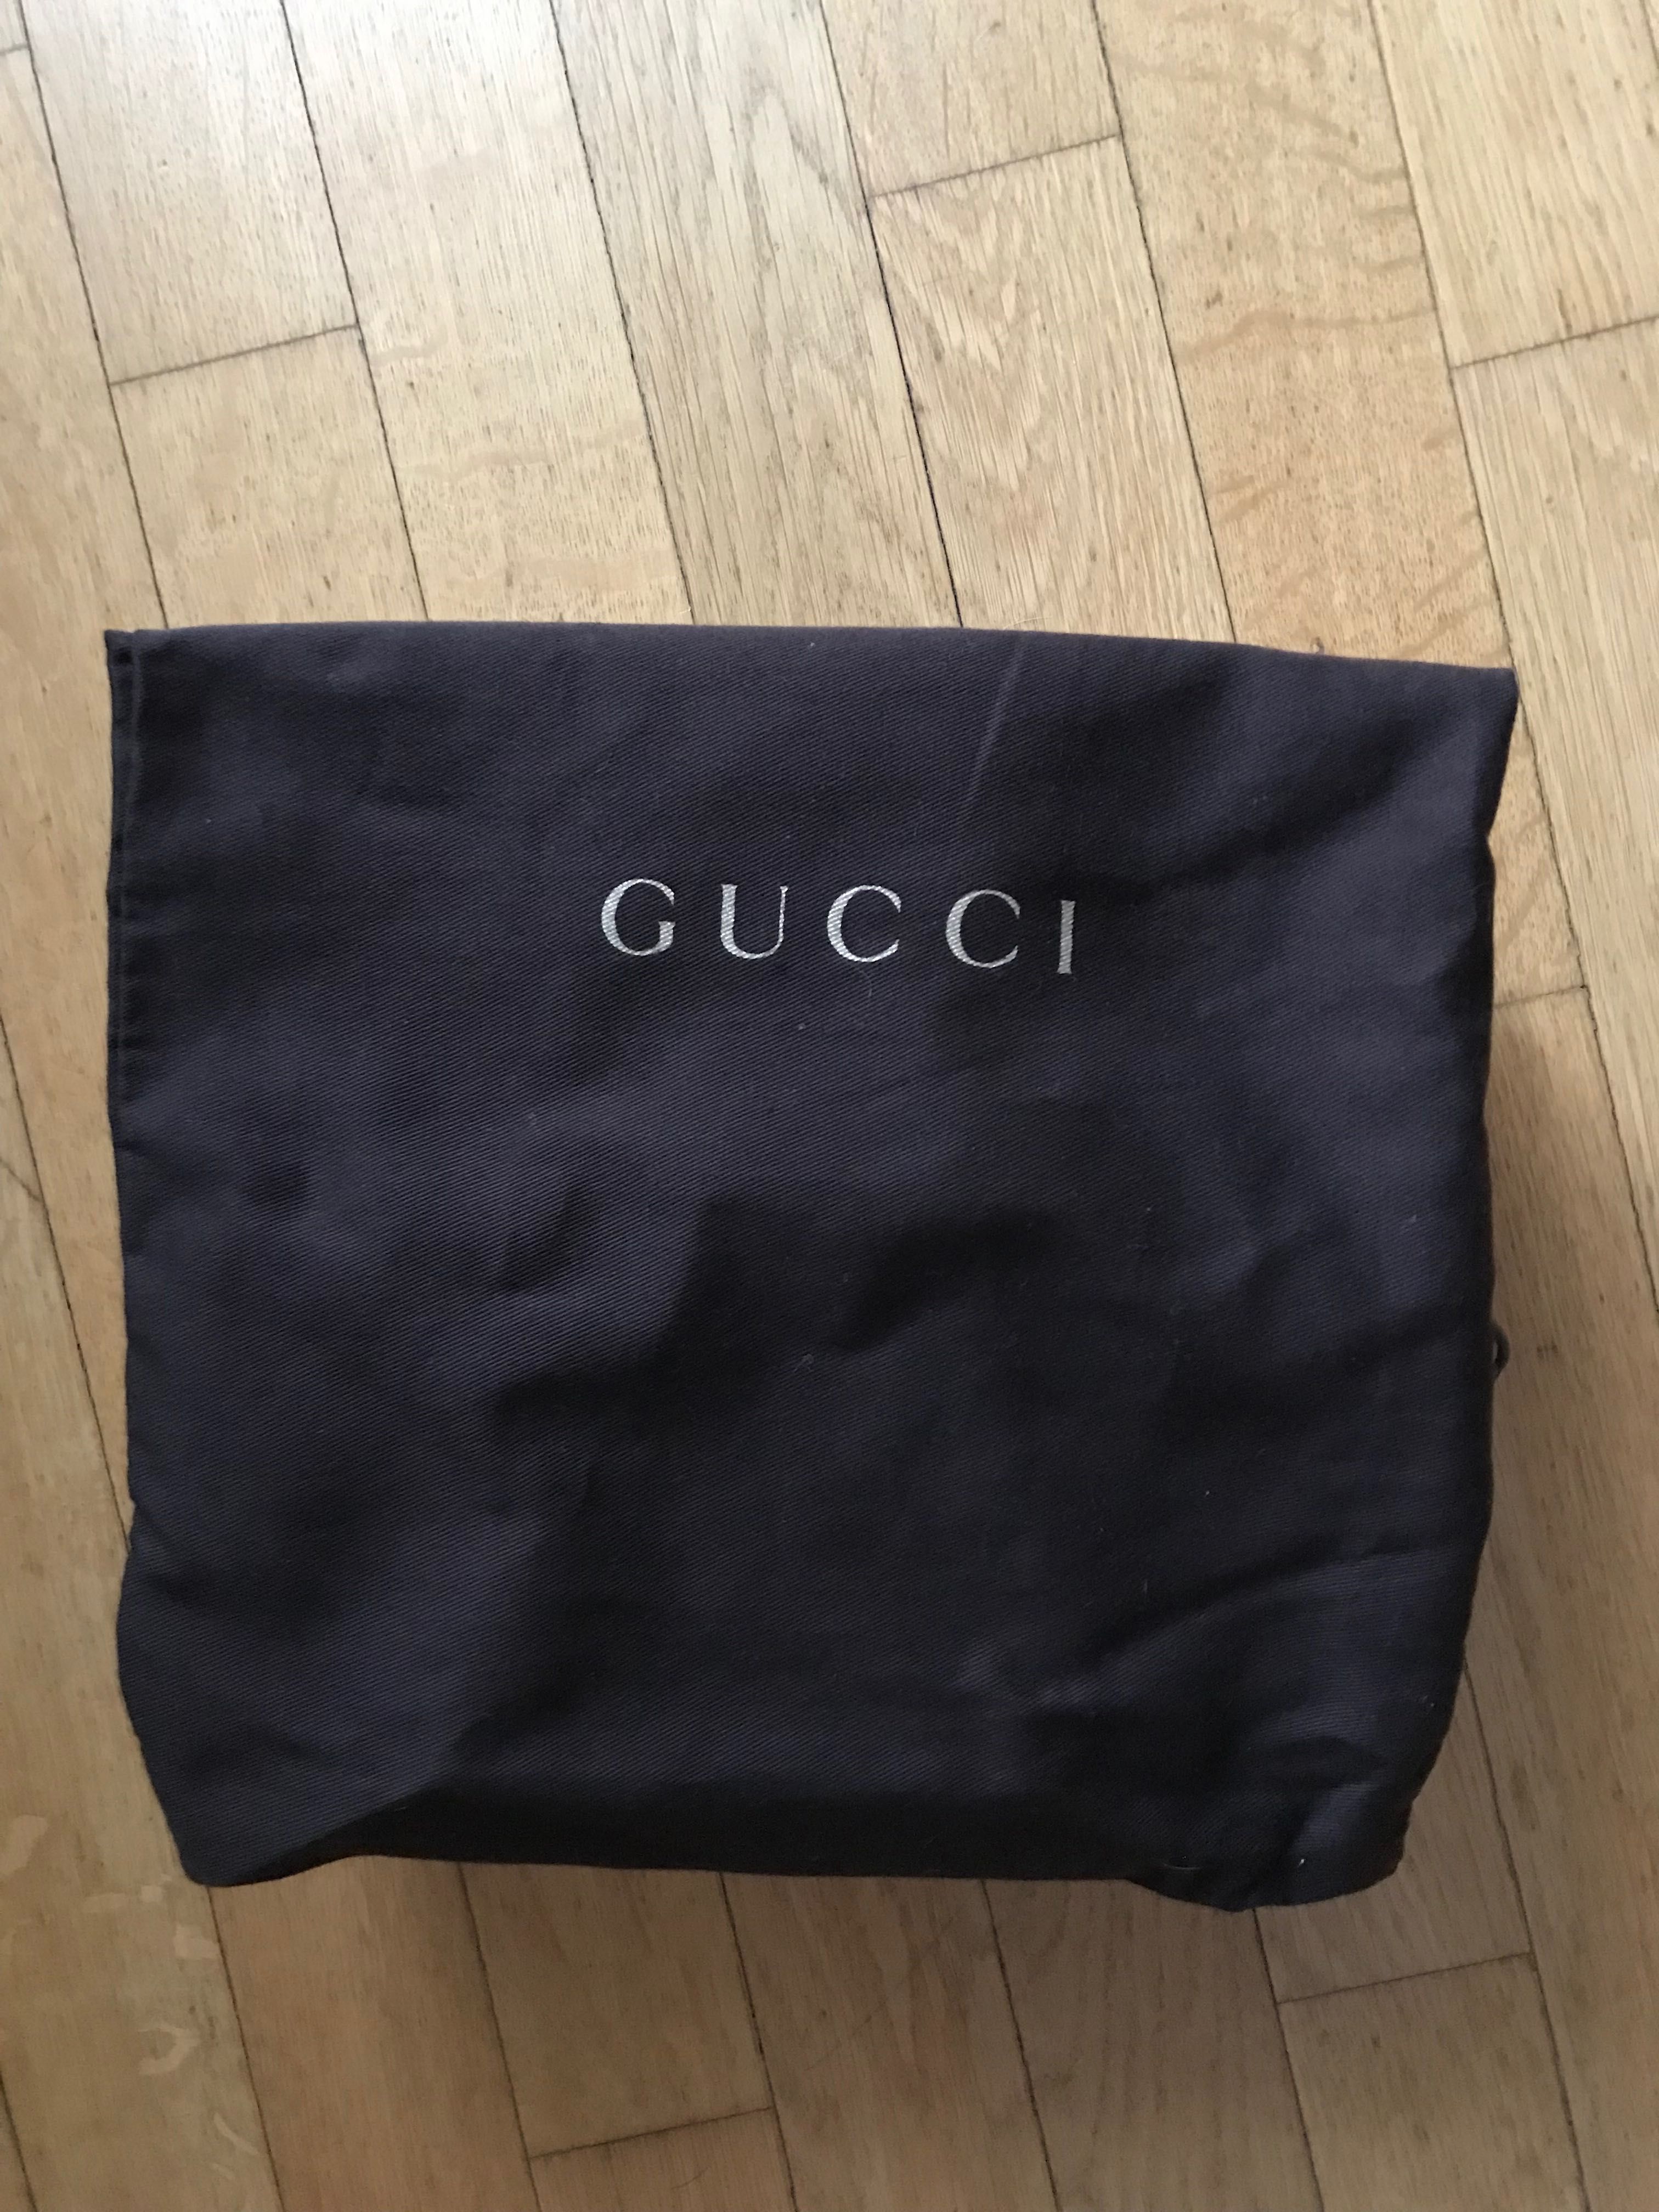 Ghete Gucci black suede, autentice, 40, noi